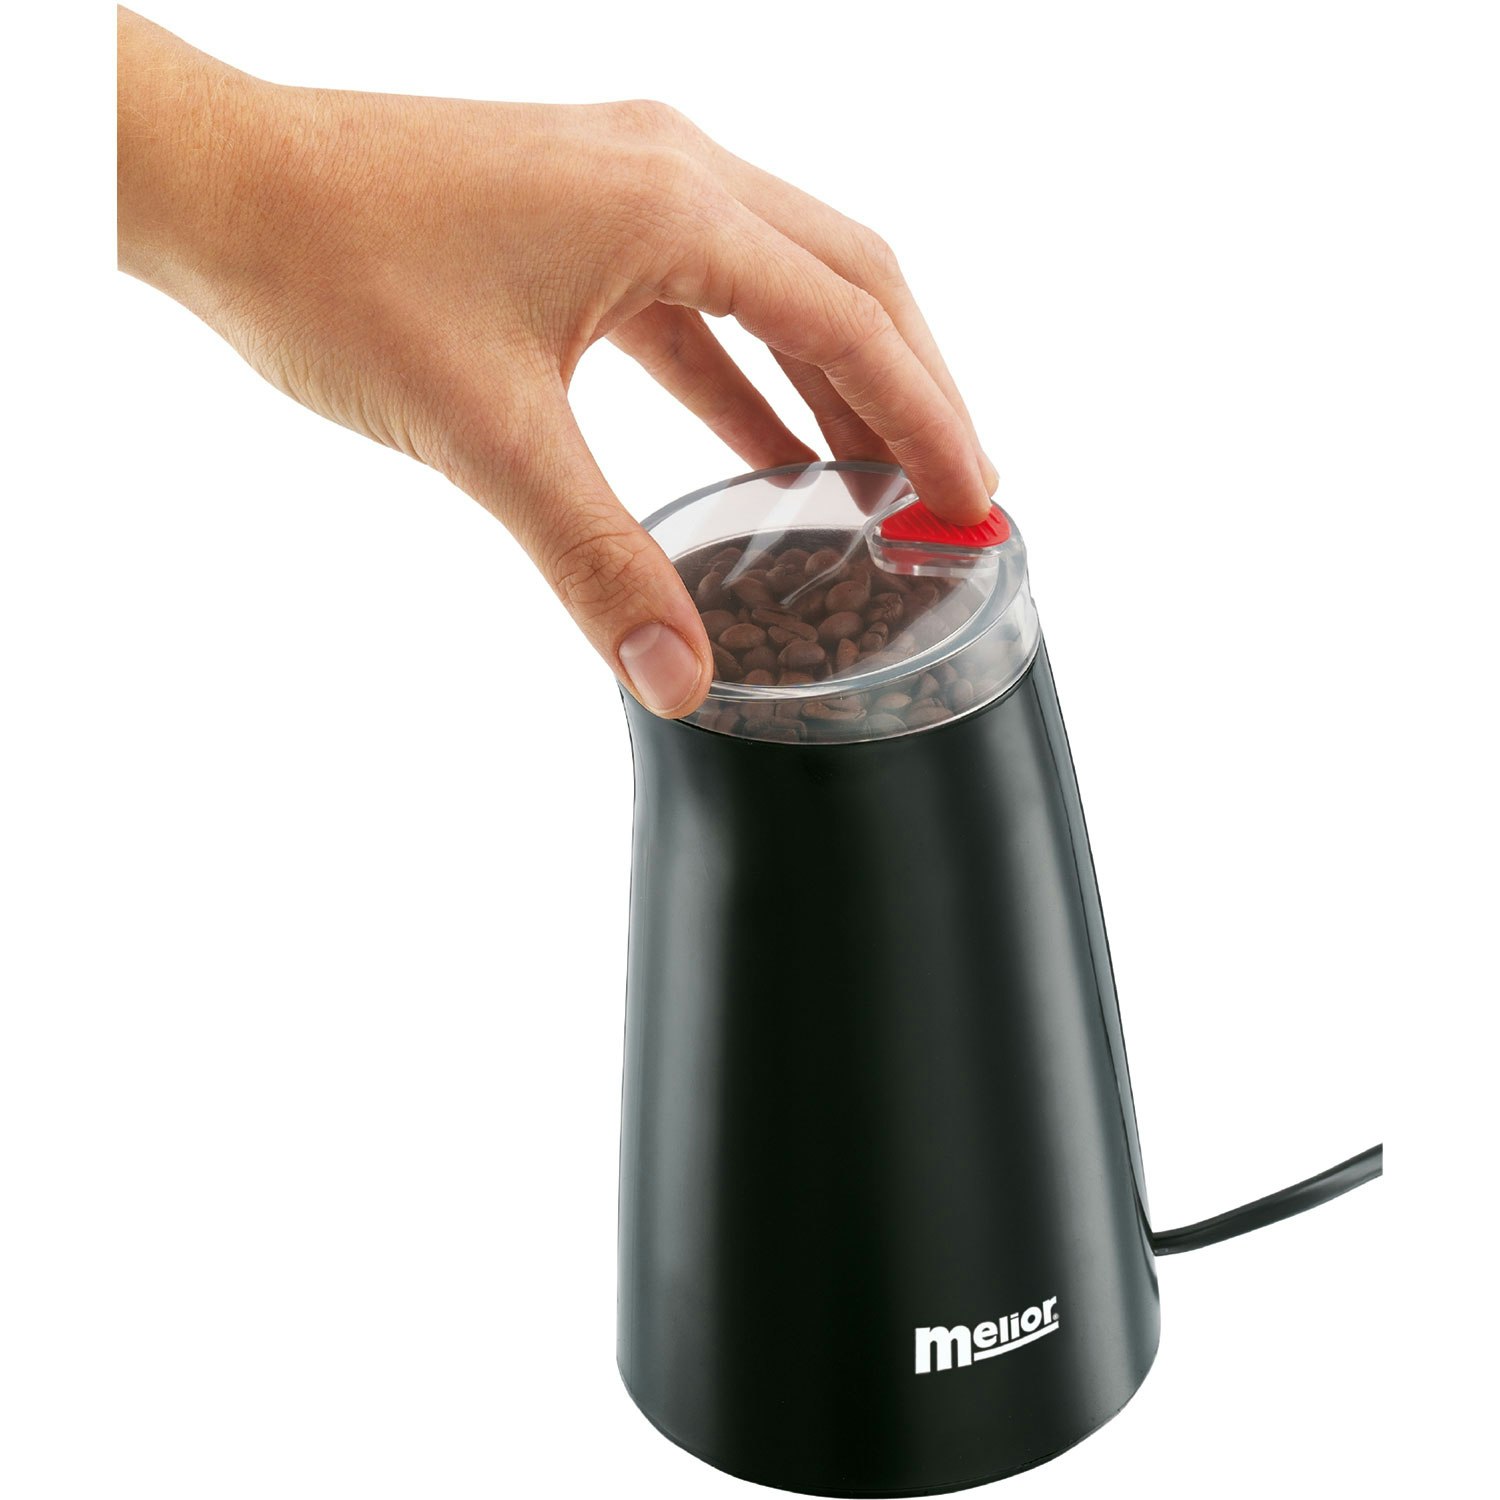 https://royaldesign.com/image/11/bodum-c-mill-electric-coffee-grinder-black-3